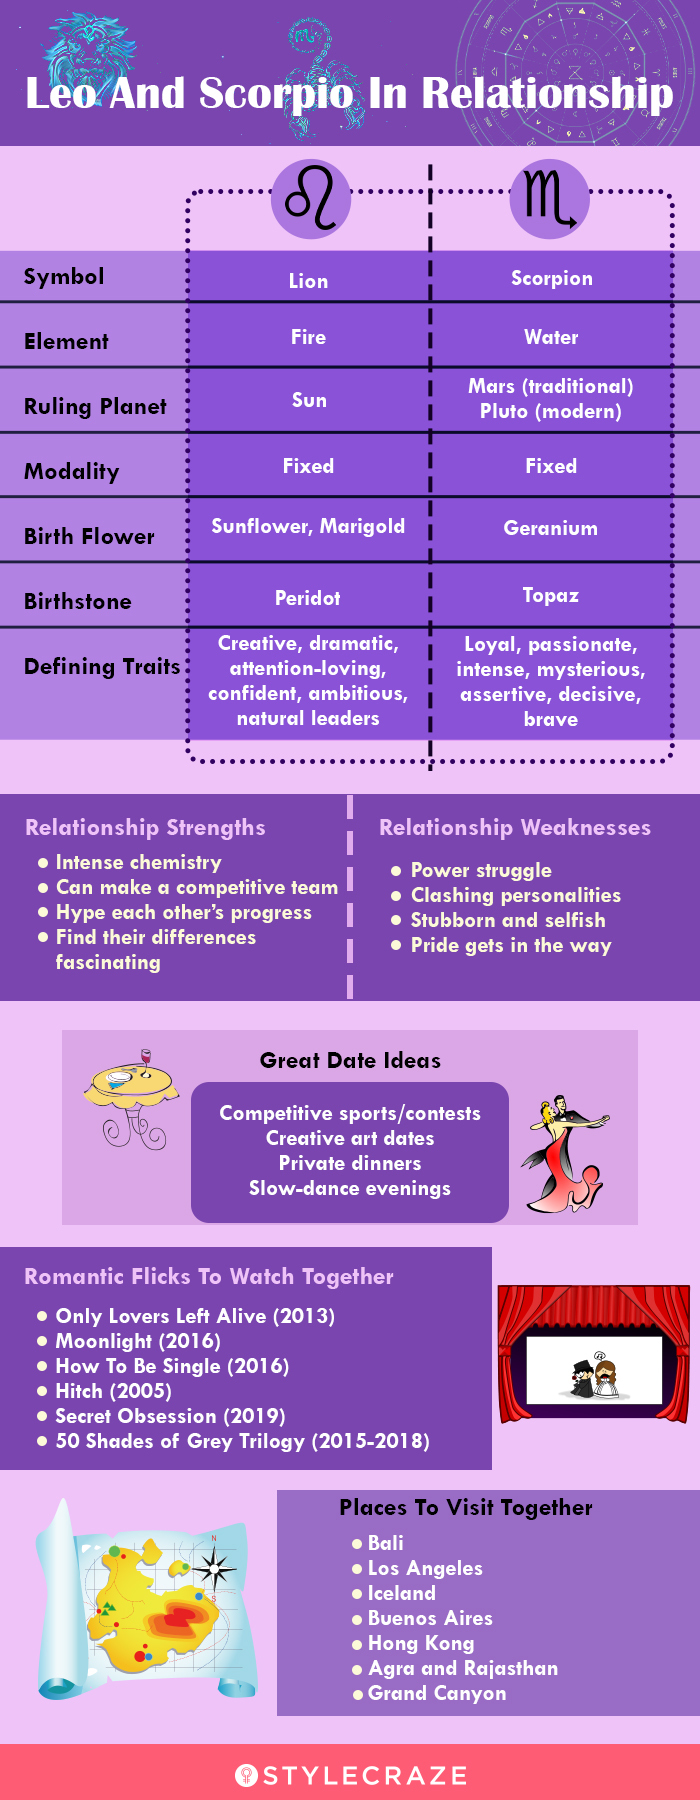 leo and scorpio in relationship (infographic)